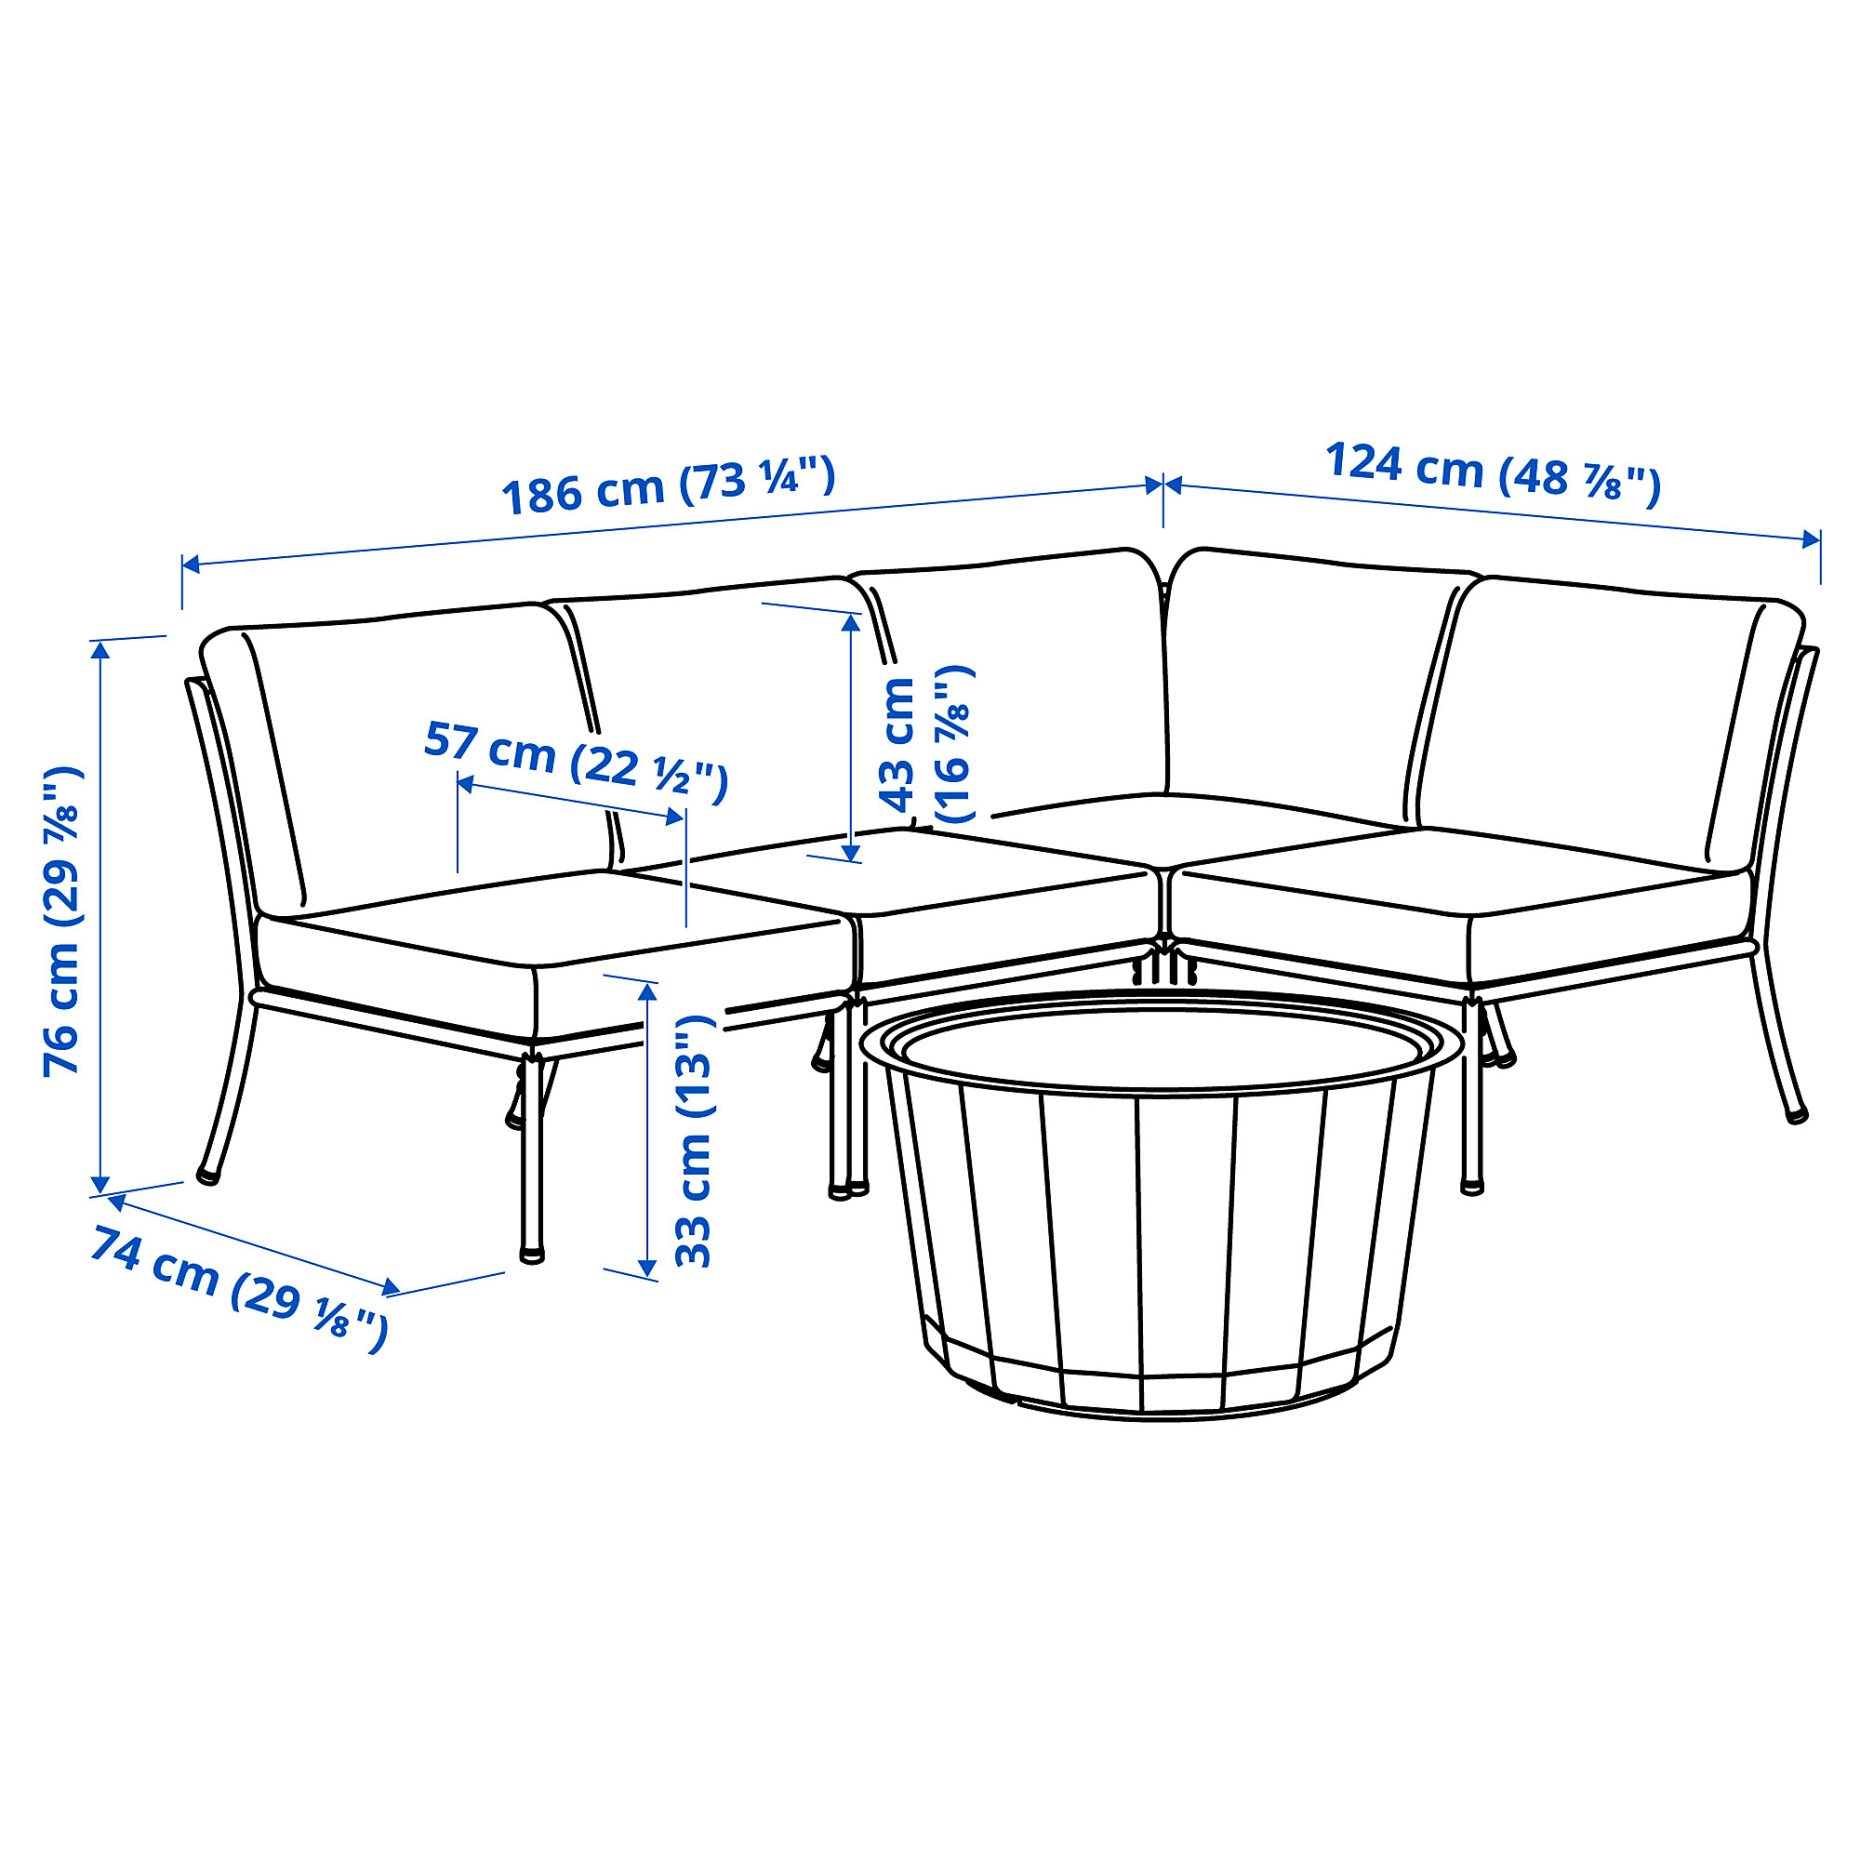 SEGERON/LAGASKA, 3-seat conversation set, outdoor, 194.948.55